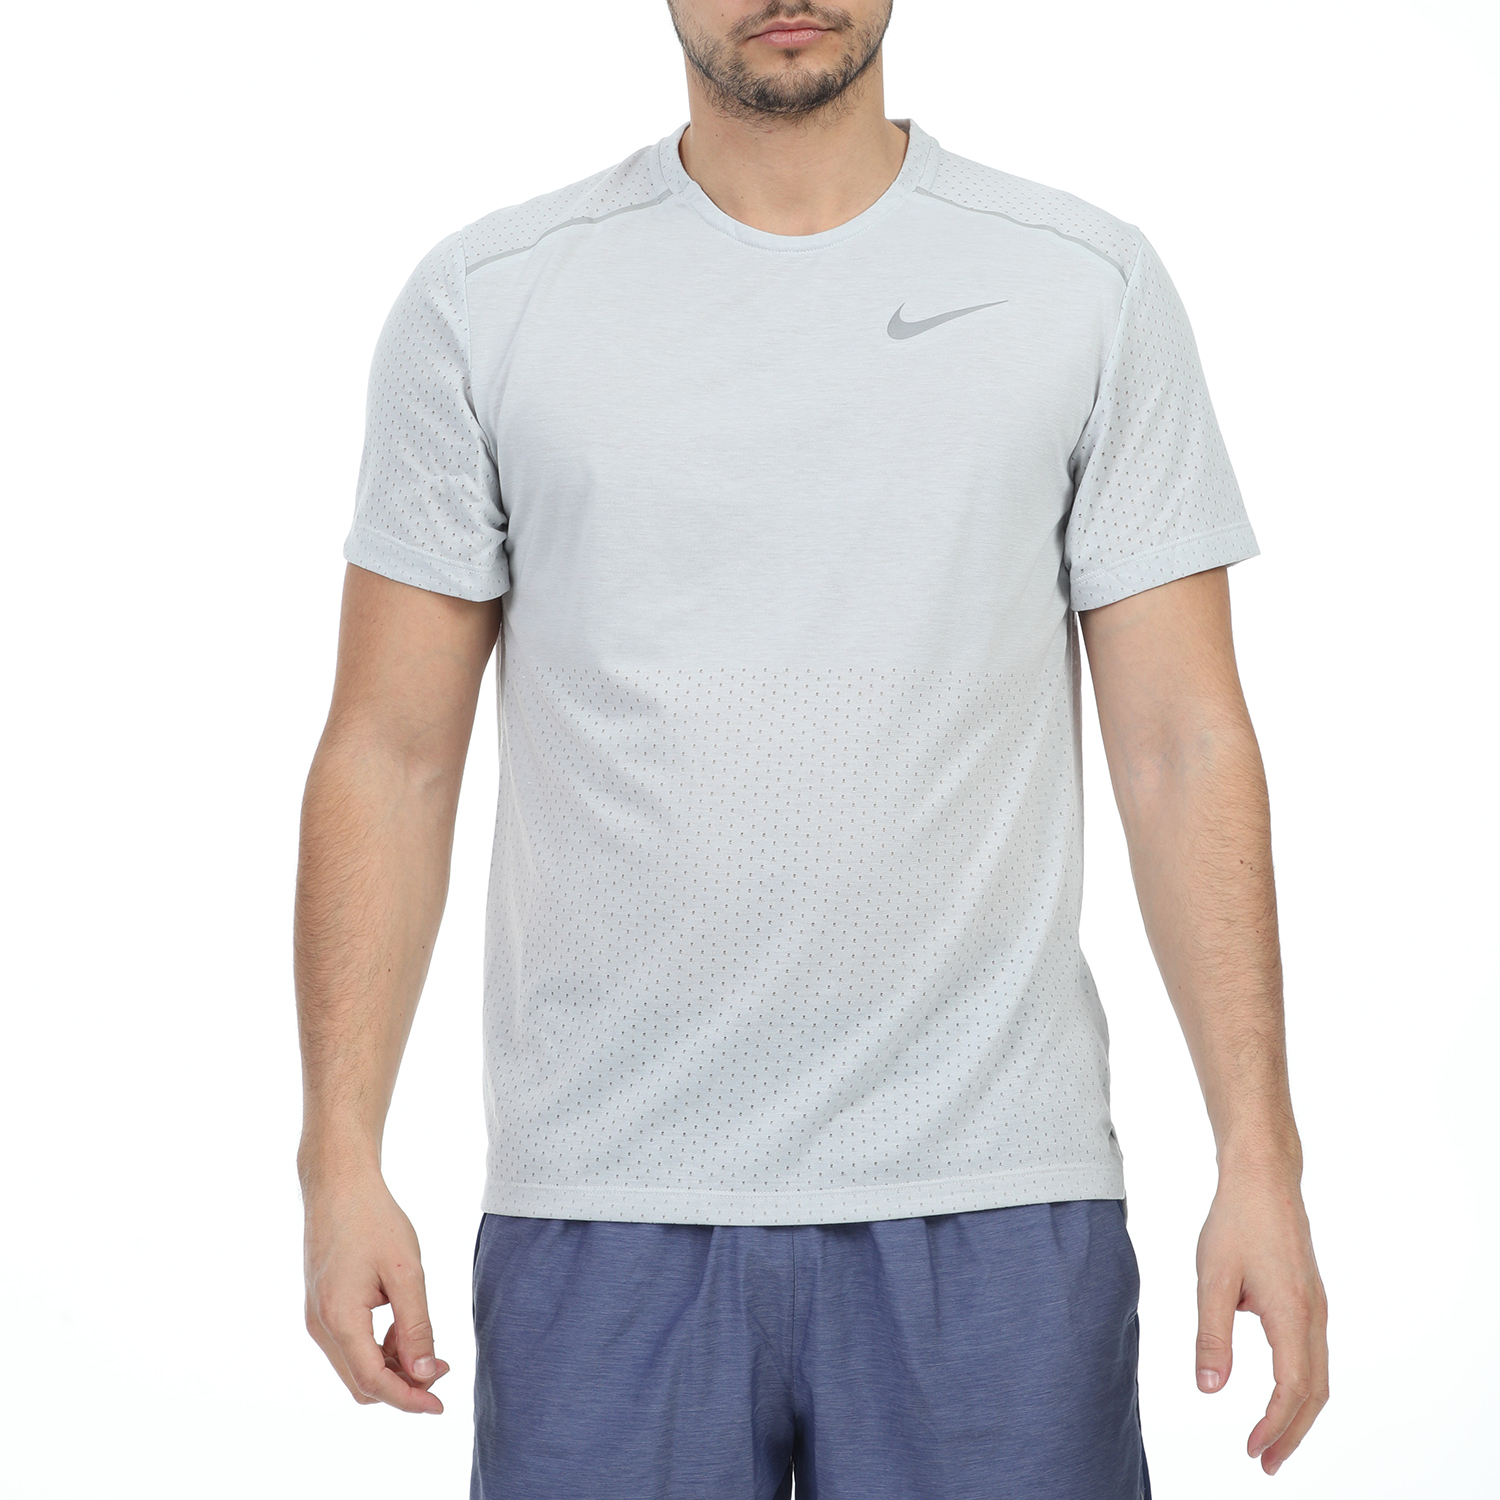 NIKE - Ανδρική μπλούζα NIKE BRTHE RISE 365 SS μπλε Ανδρικά/Ρούχα/Αθλητικά/T-shirt